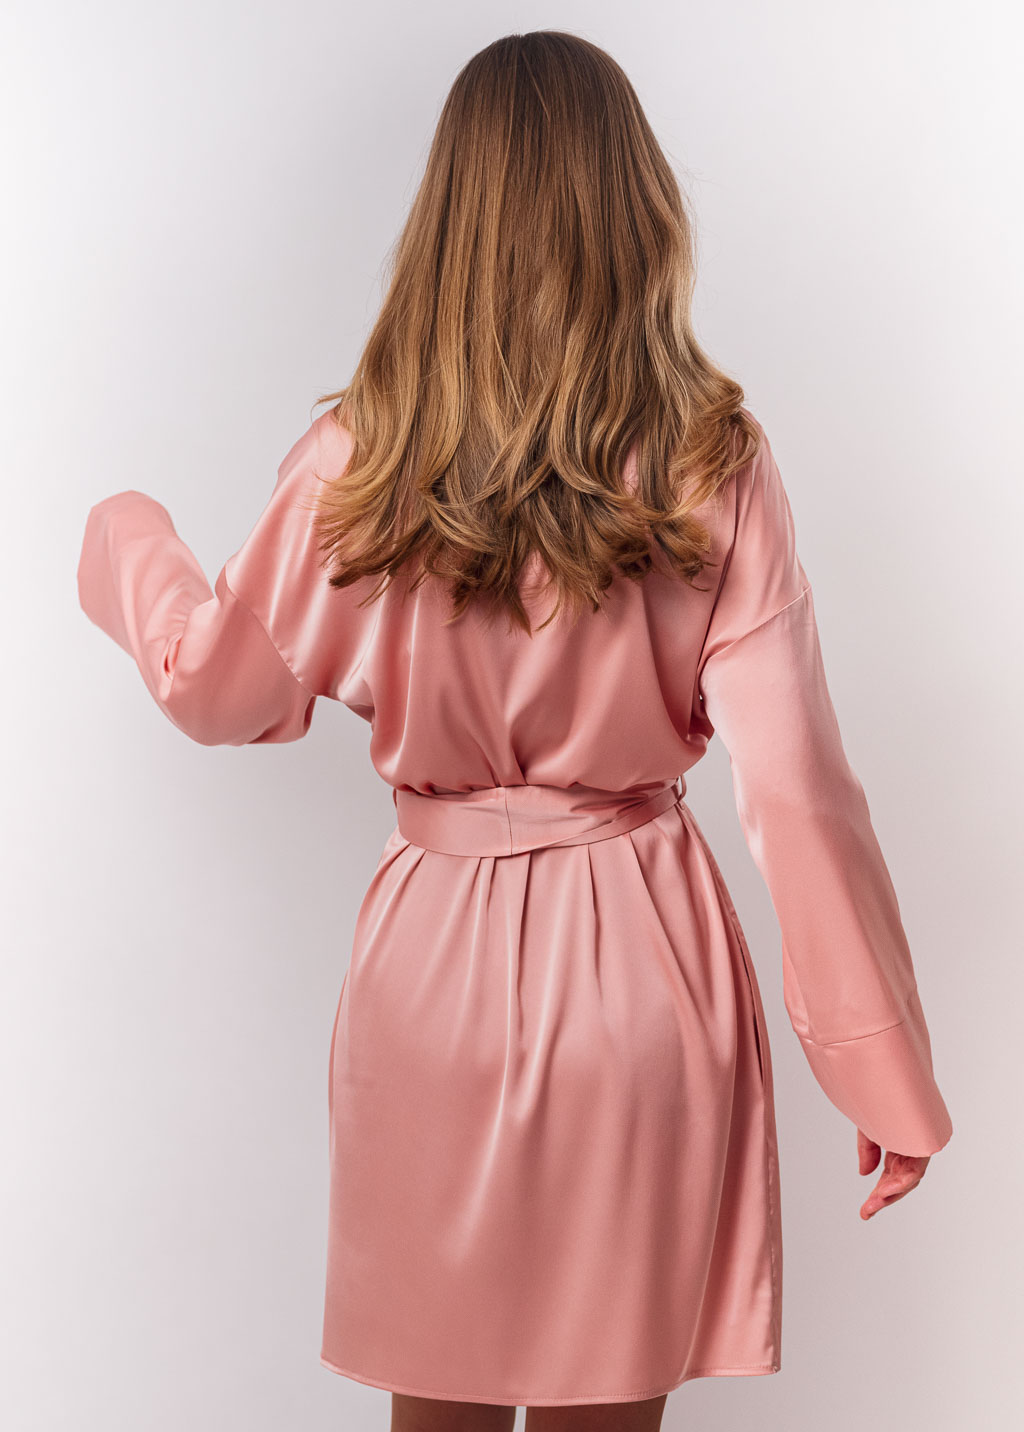 Blush pink silk robe with pockets